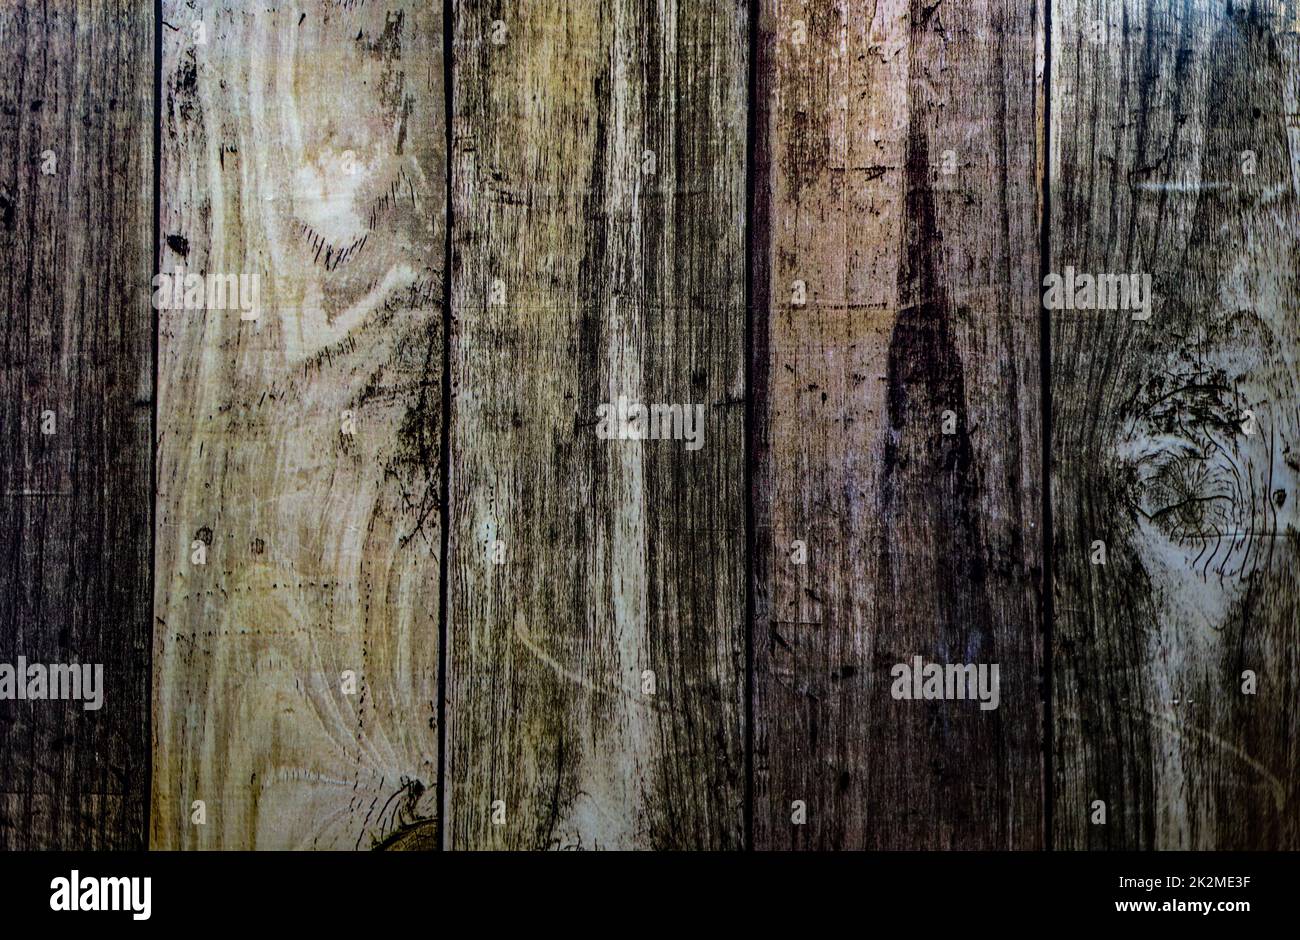 Wall of wood Stock Photo